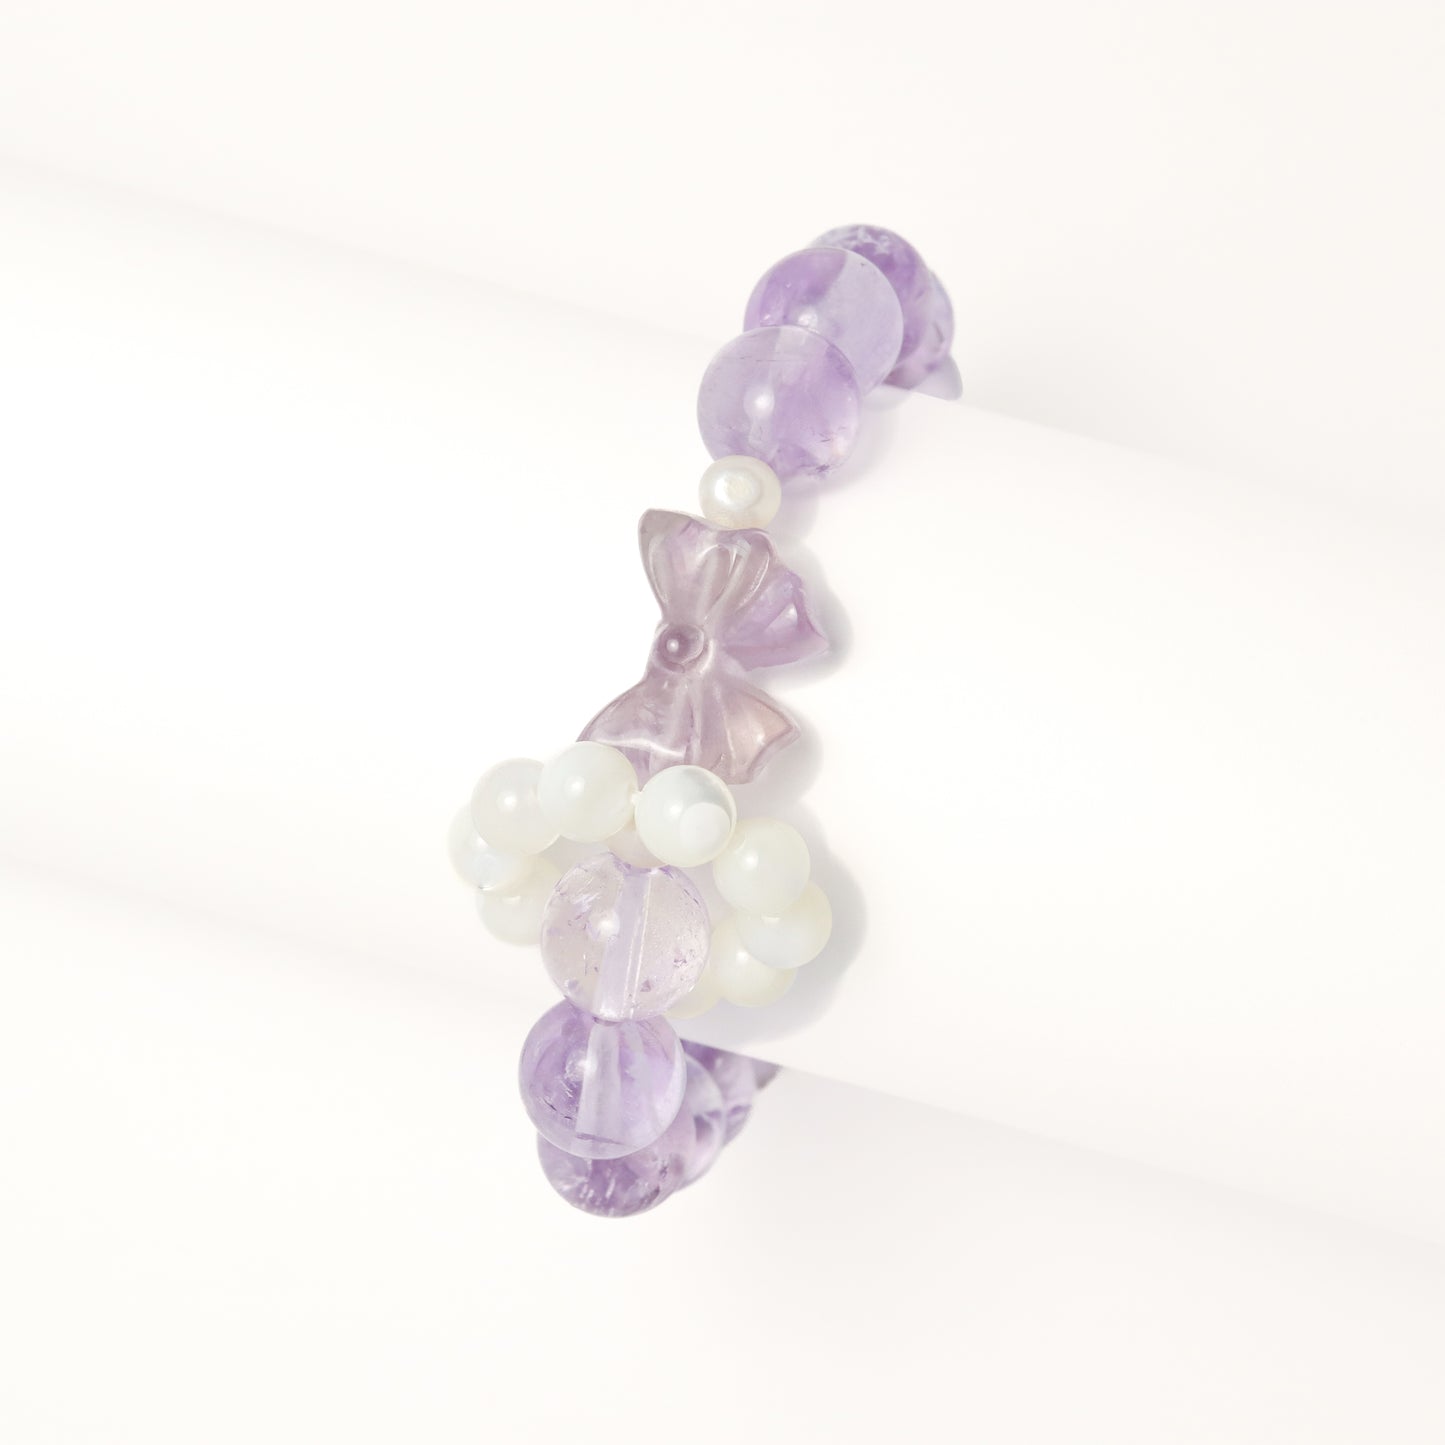 Spring Break - Lavender Amethyst Bracelet